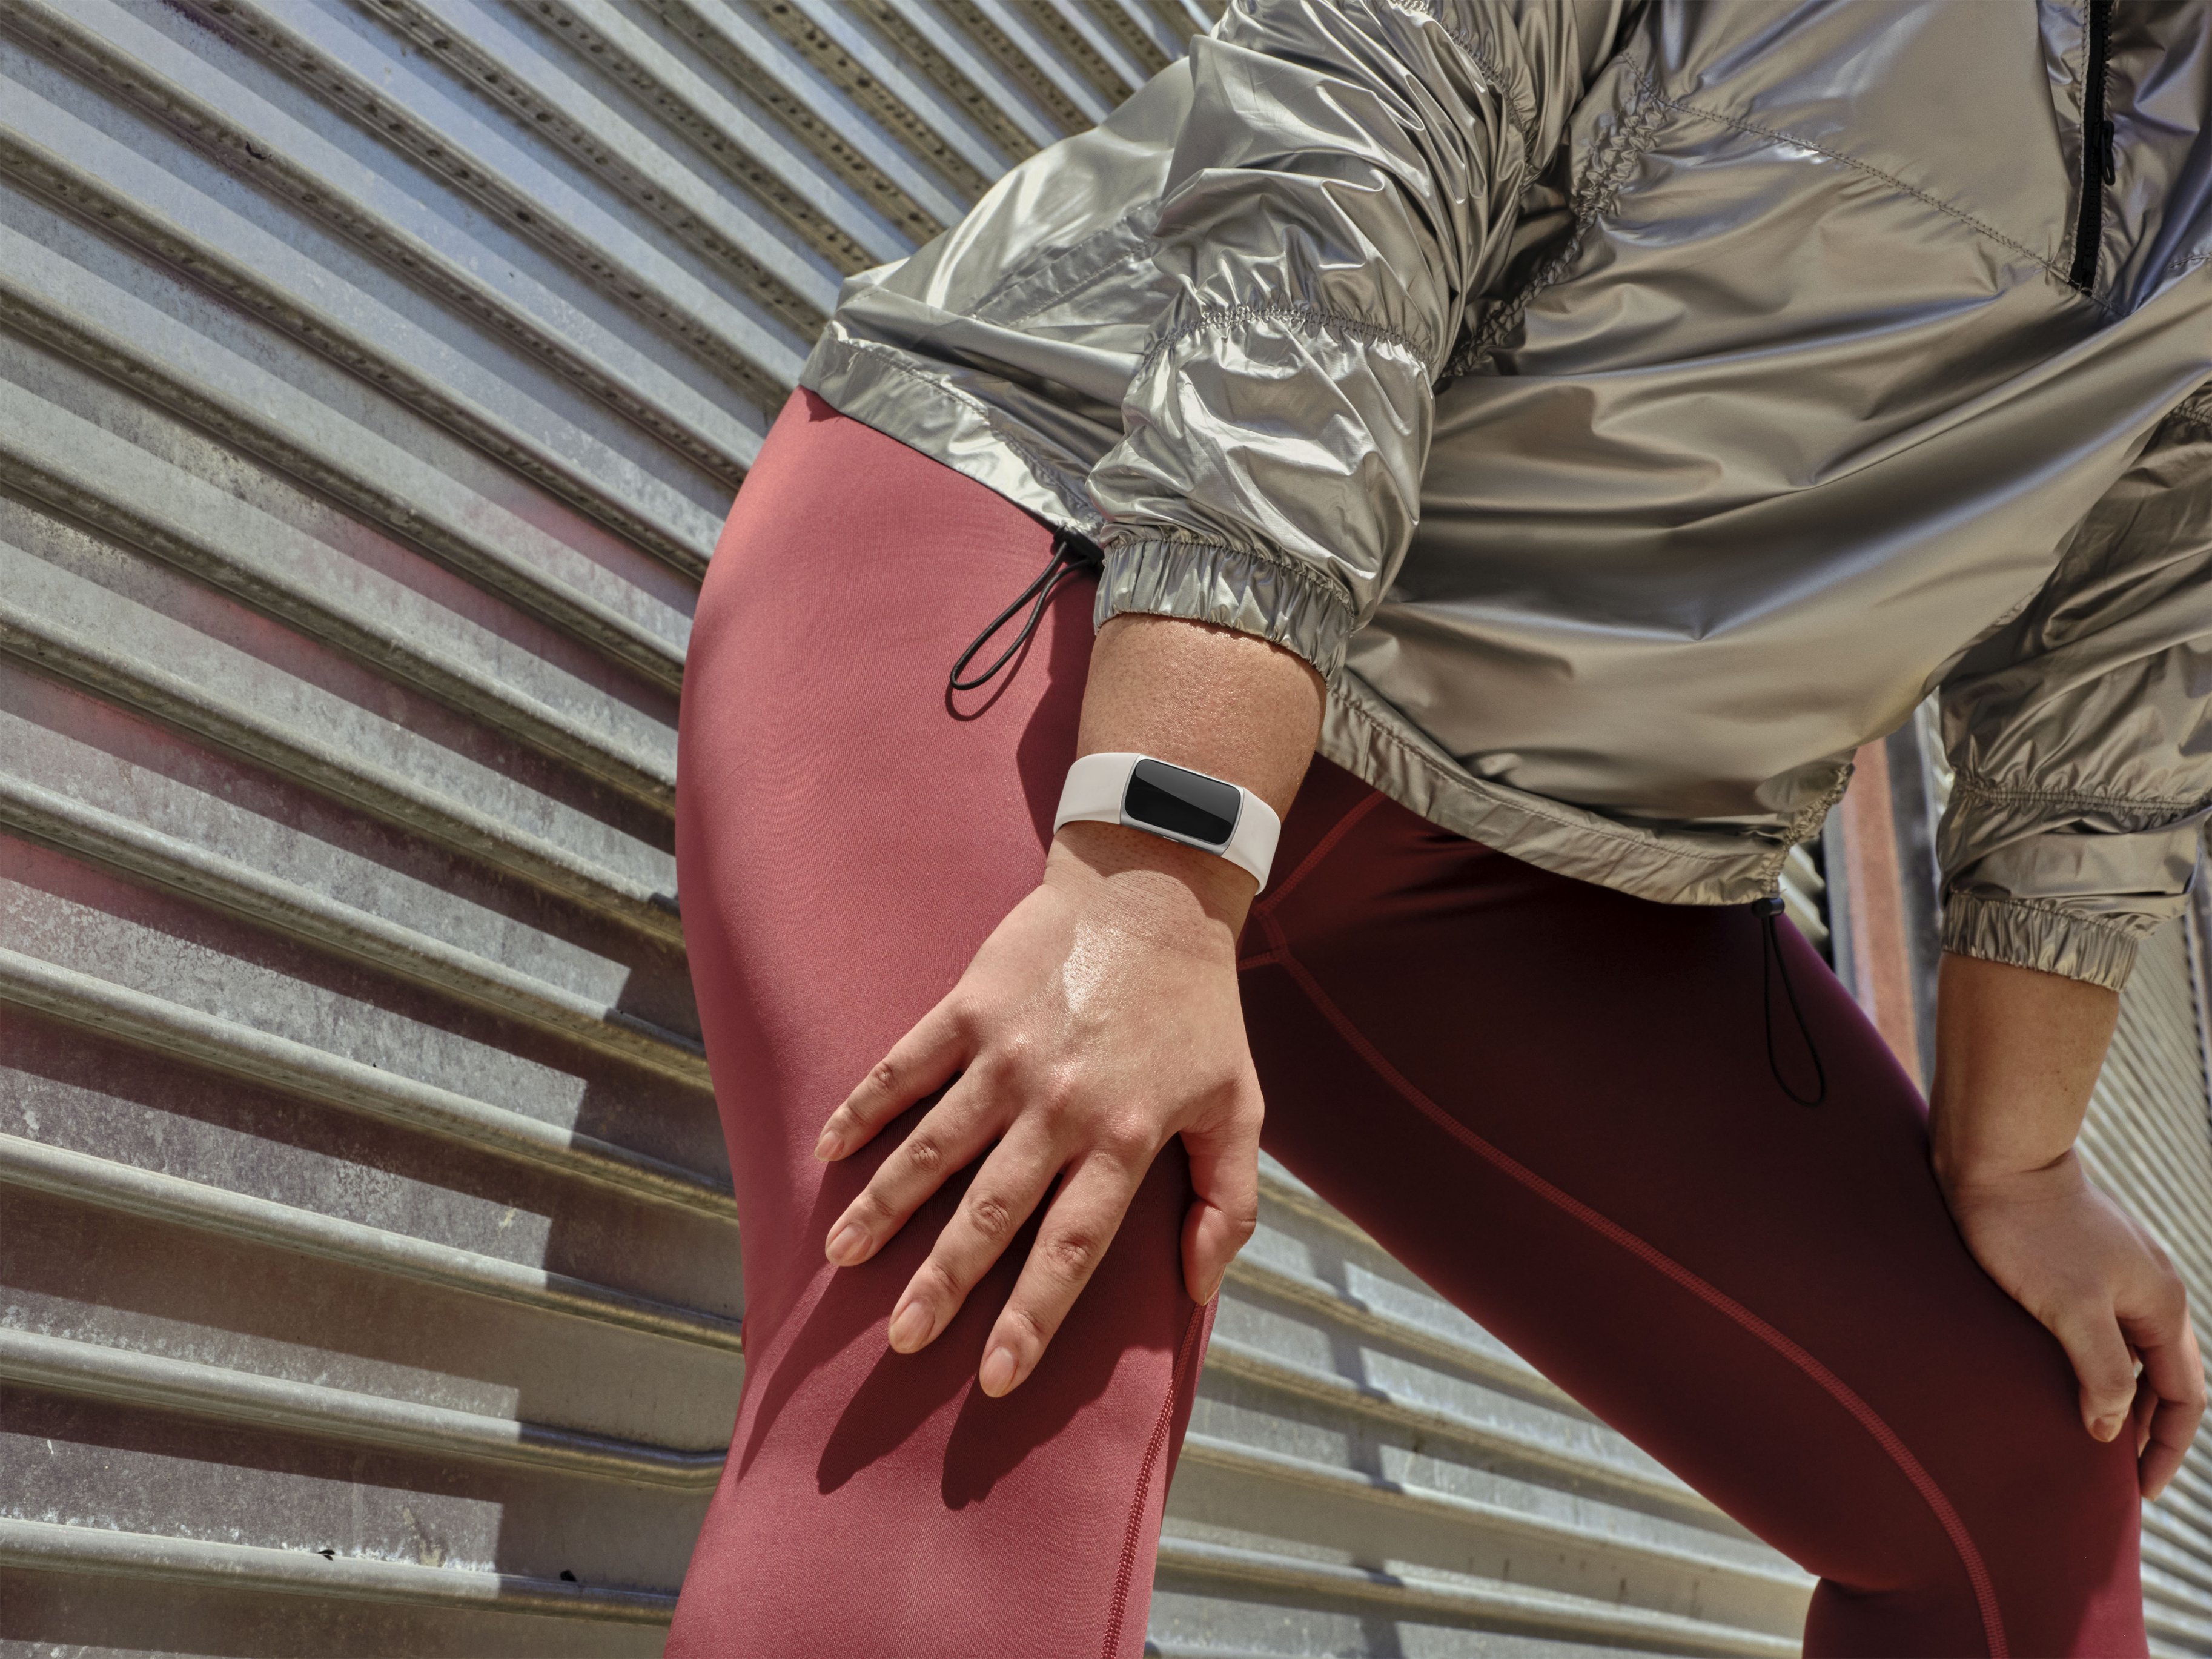 Fitbit Charge 6 Advanced Fitness & Health Tracker - Obsidian / Black  Aluminum